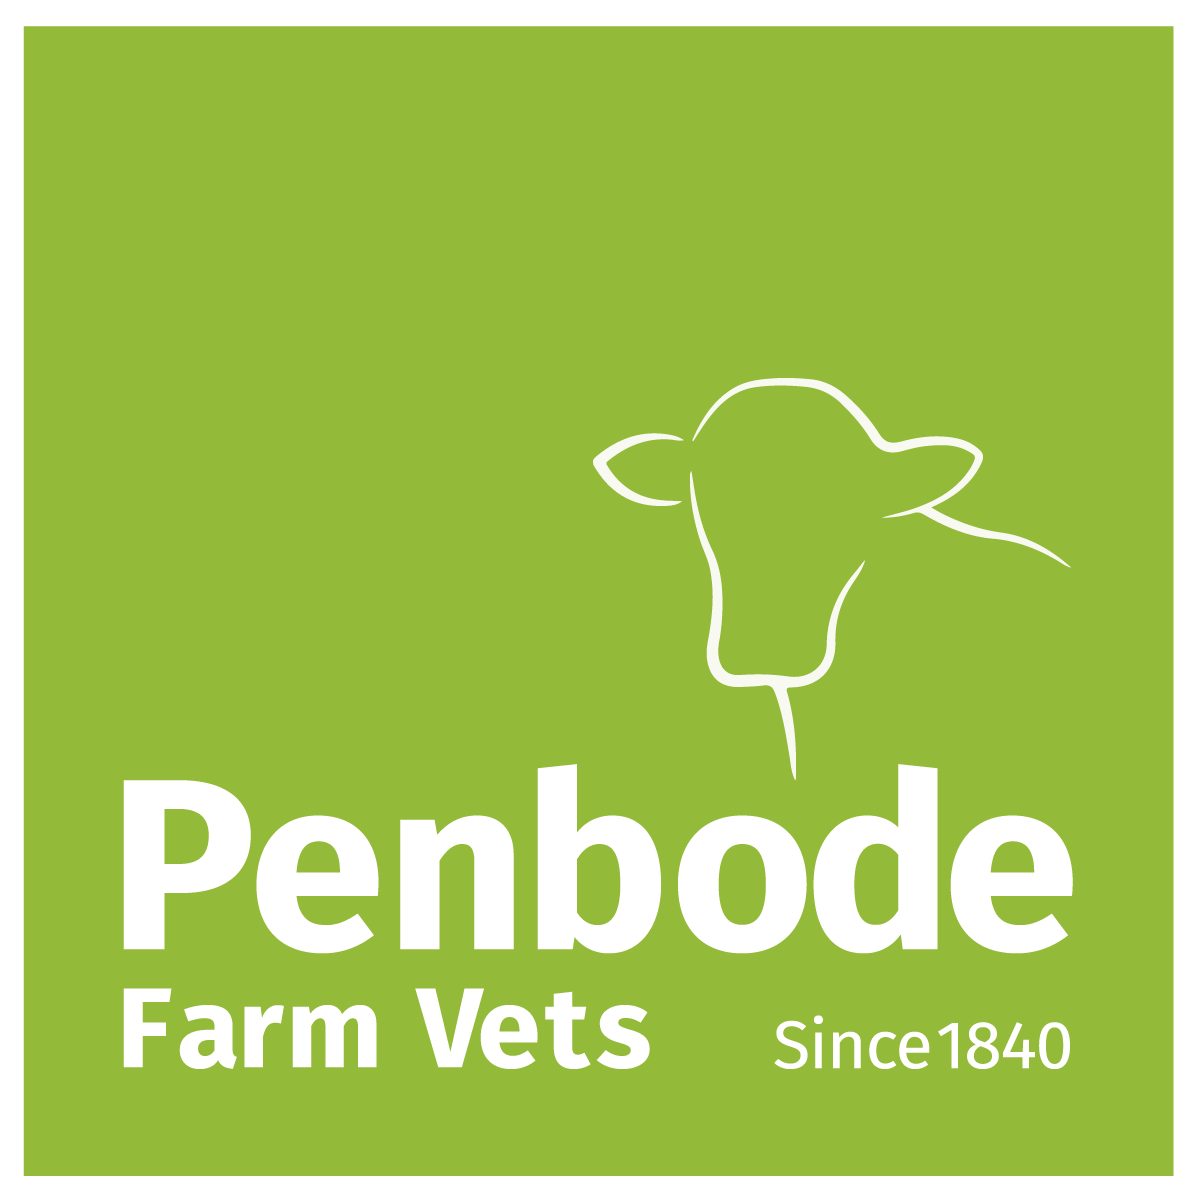 Penbode Farm Vets